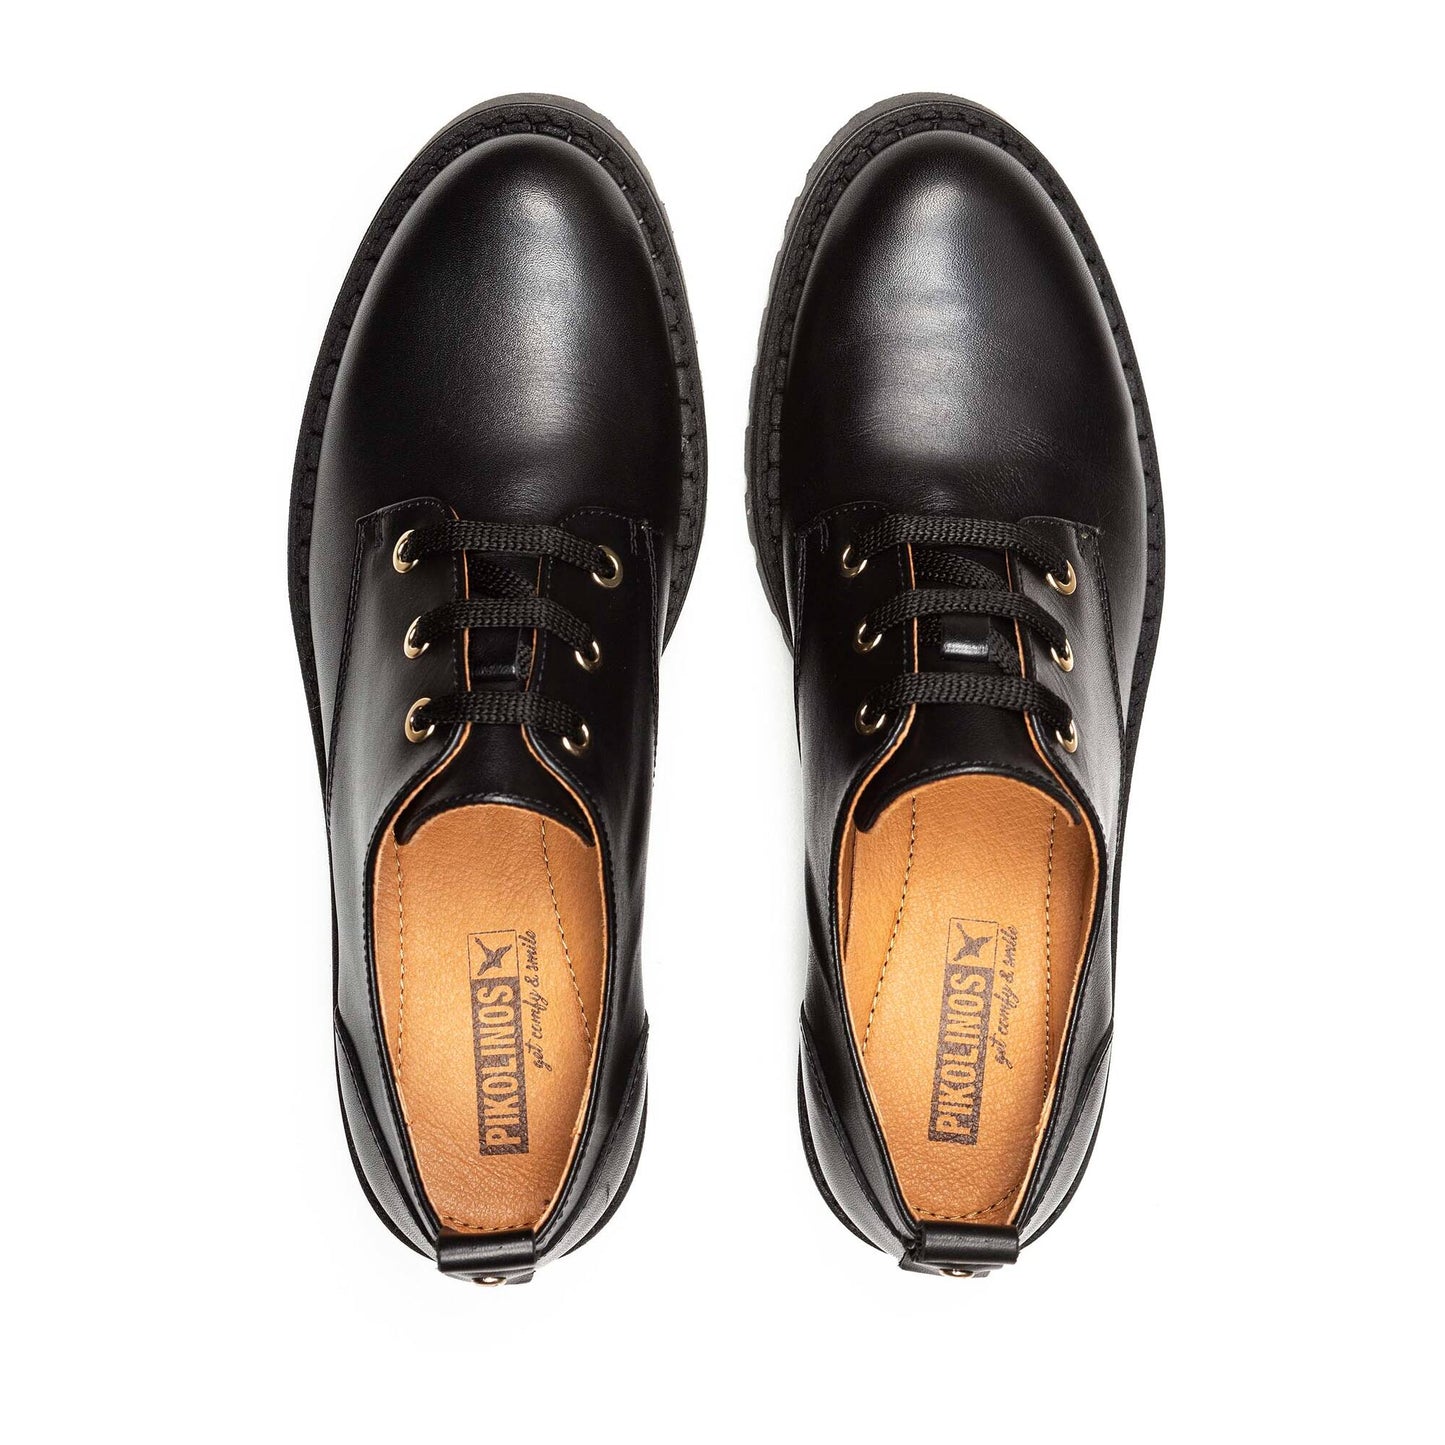 Pikolinos Women's Aviles W6P-4632 Leather Platform Derby Shoes Black